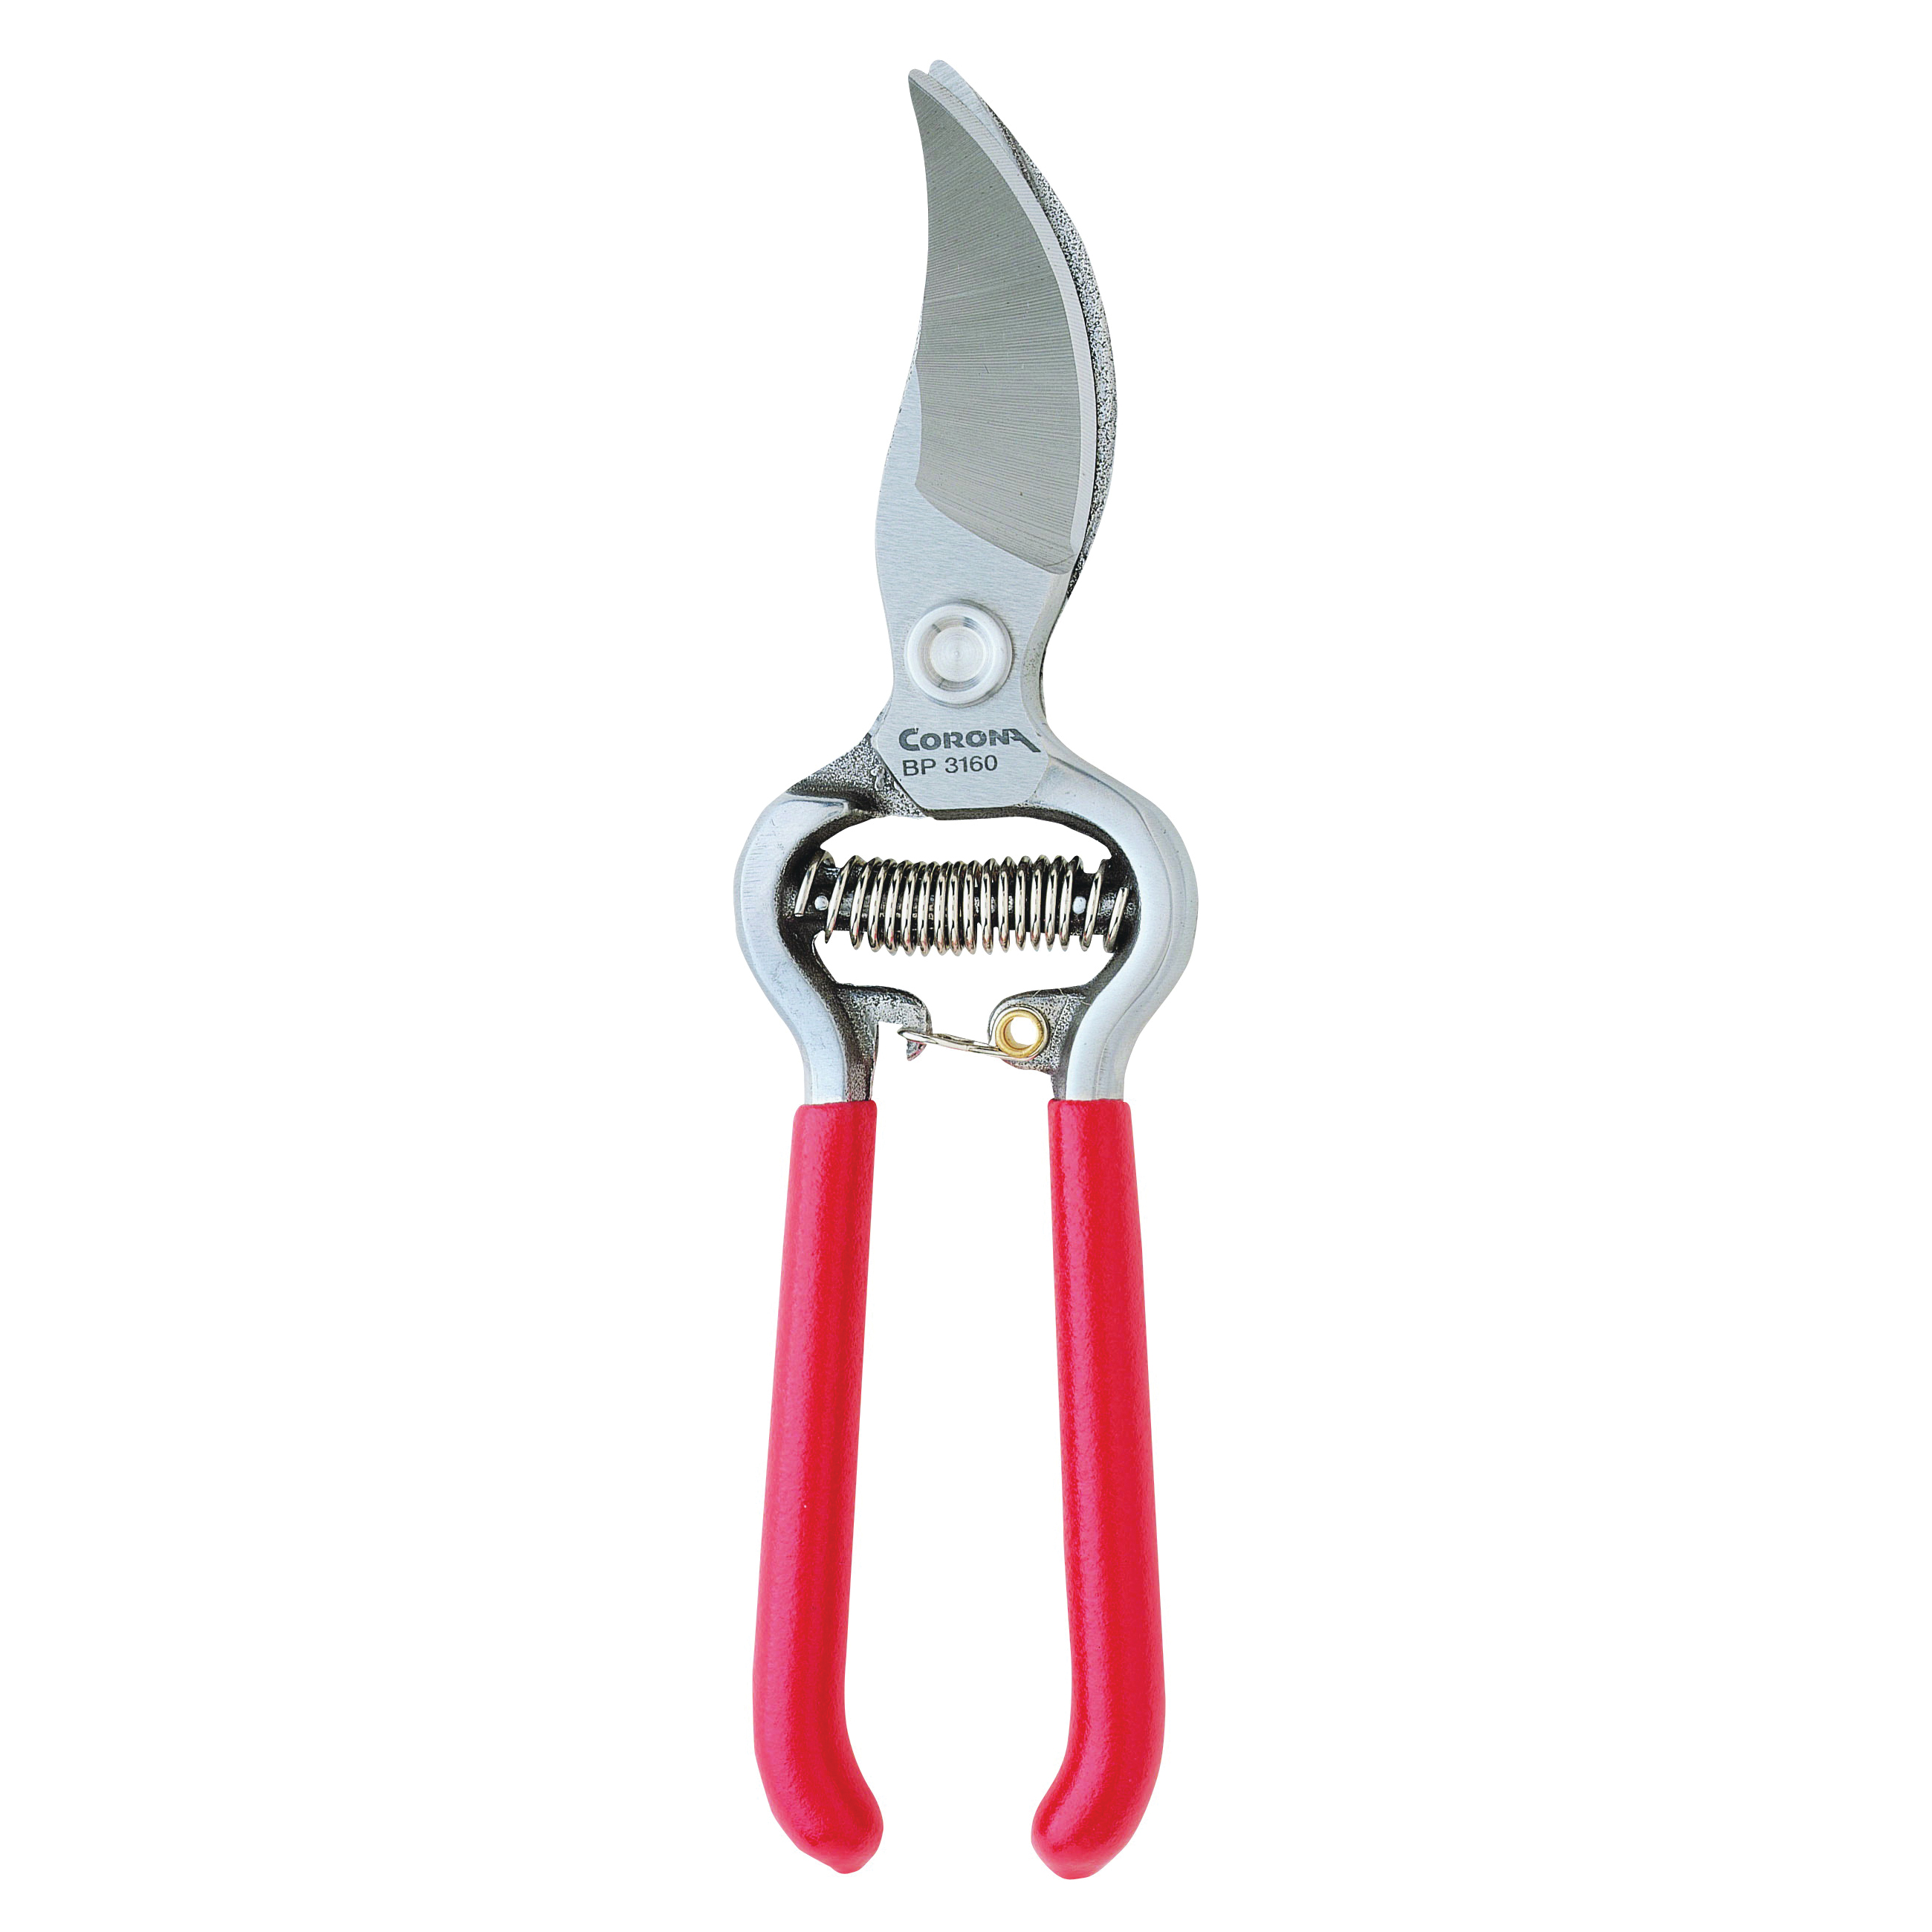 BP 3160 Pruning Shear, 3/4 in Cutting Capacity, Steel Blade, Bypass Blade, Steel Handle